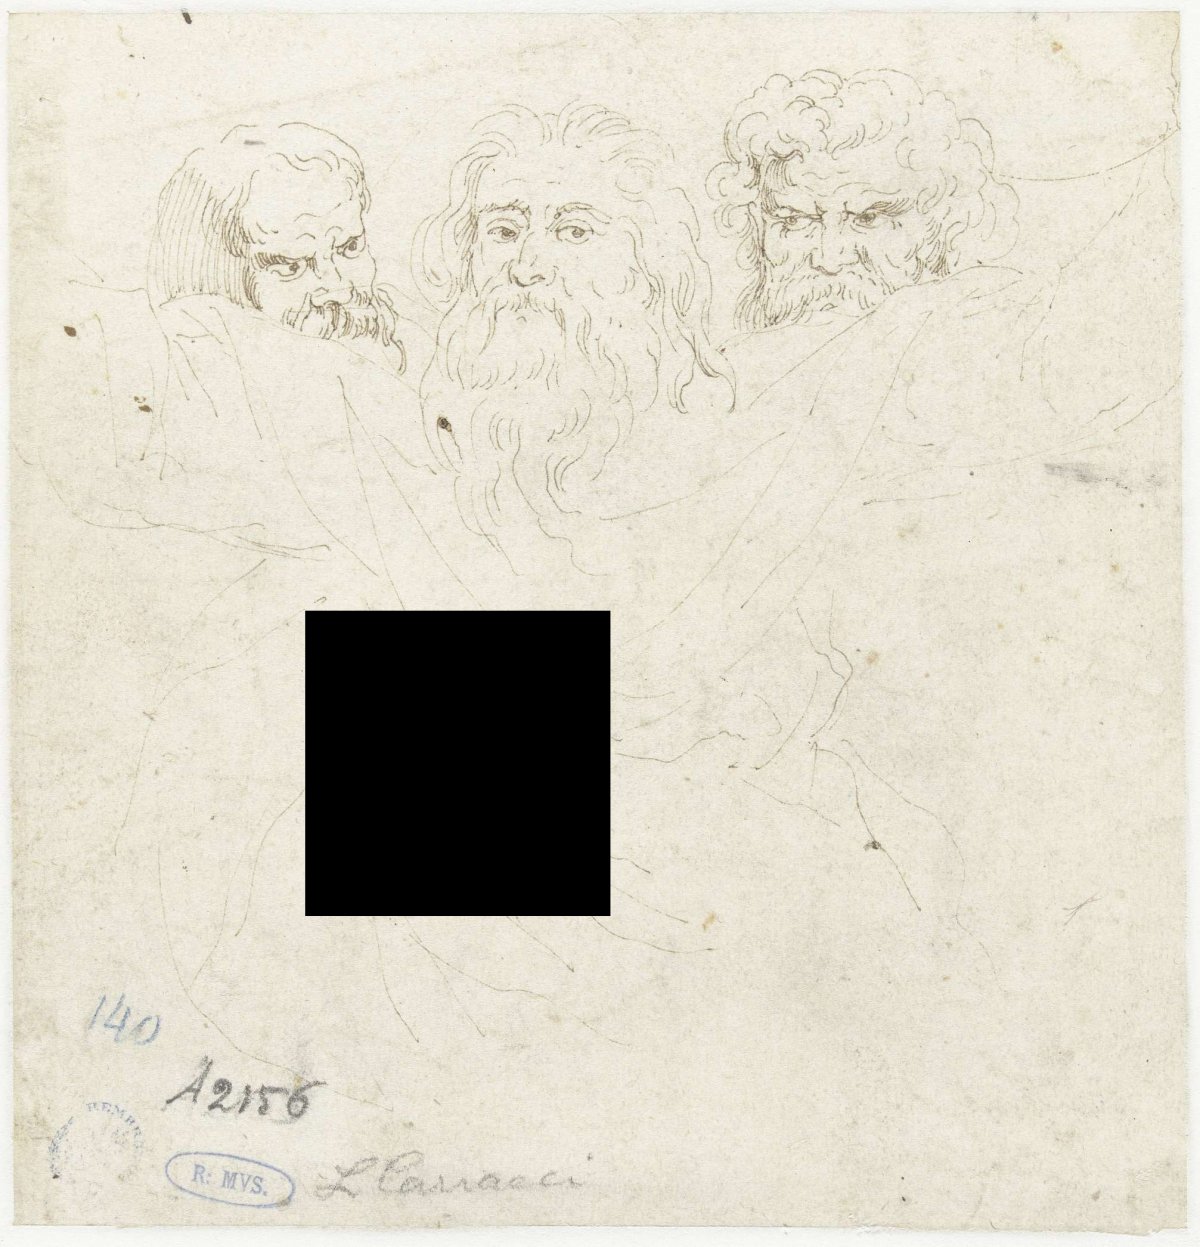 Heads of three elderly men with beards, Anthony van Dyck, 1610 - 1641